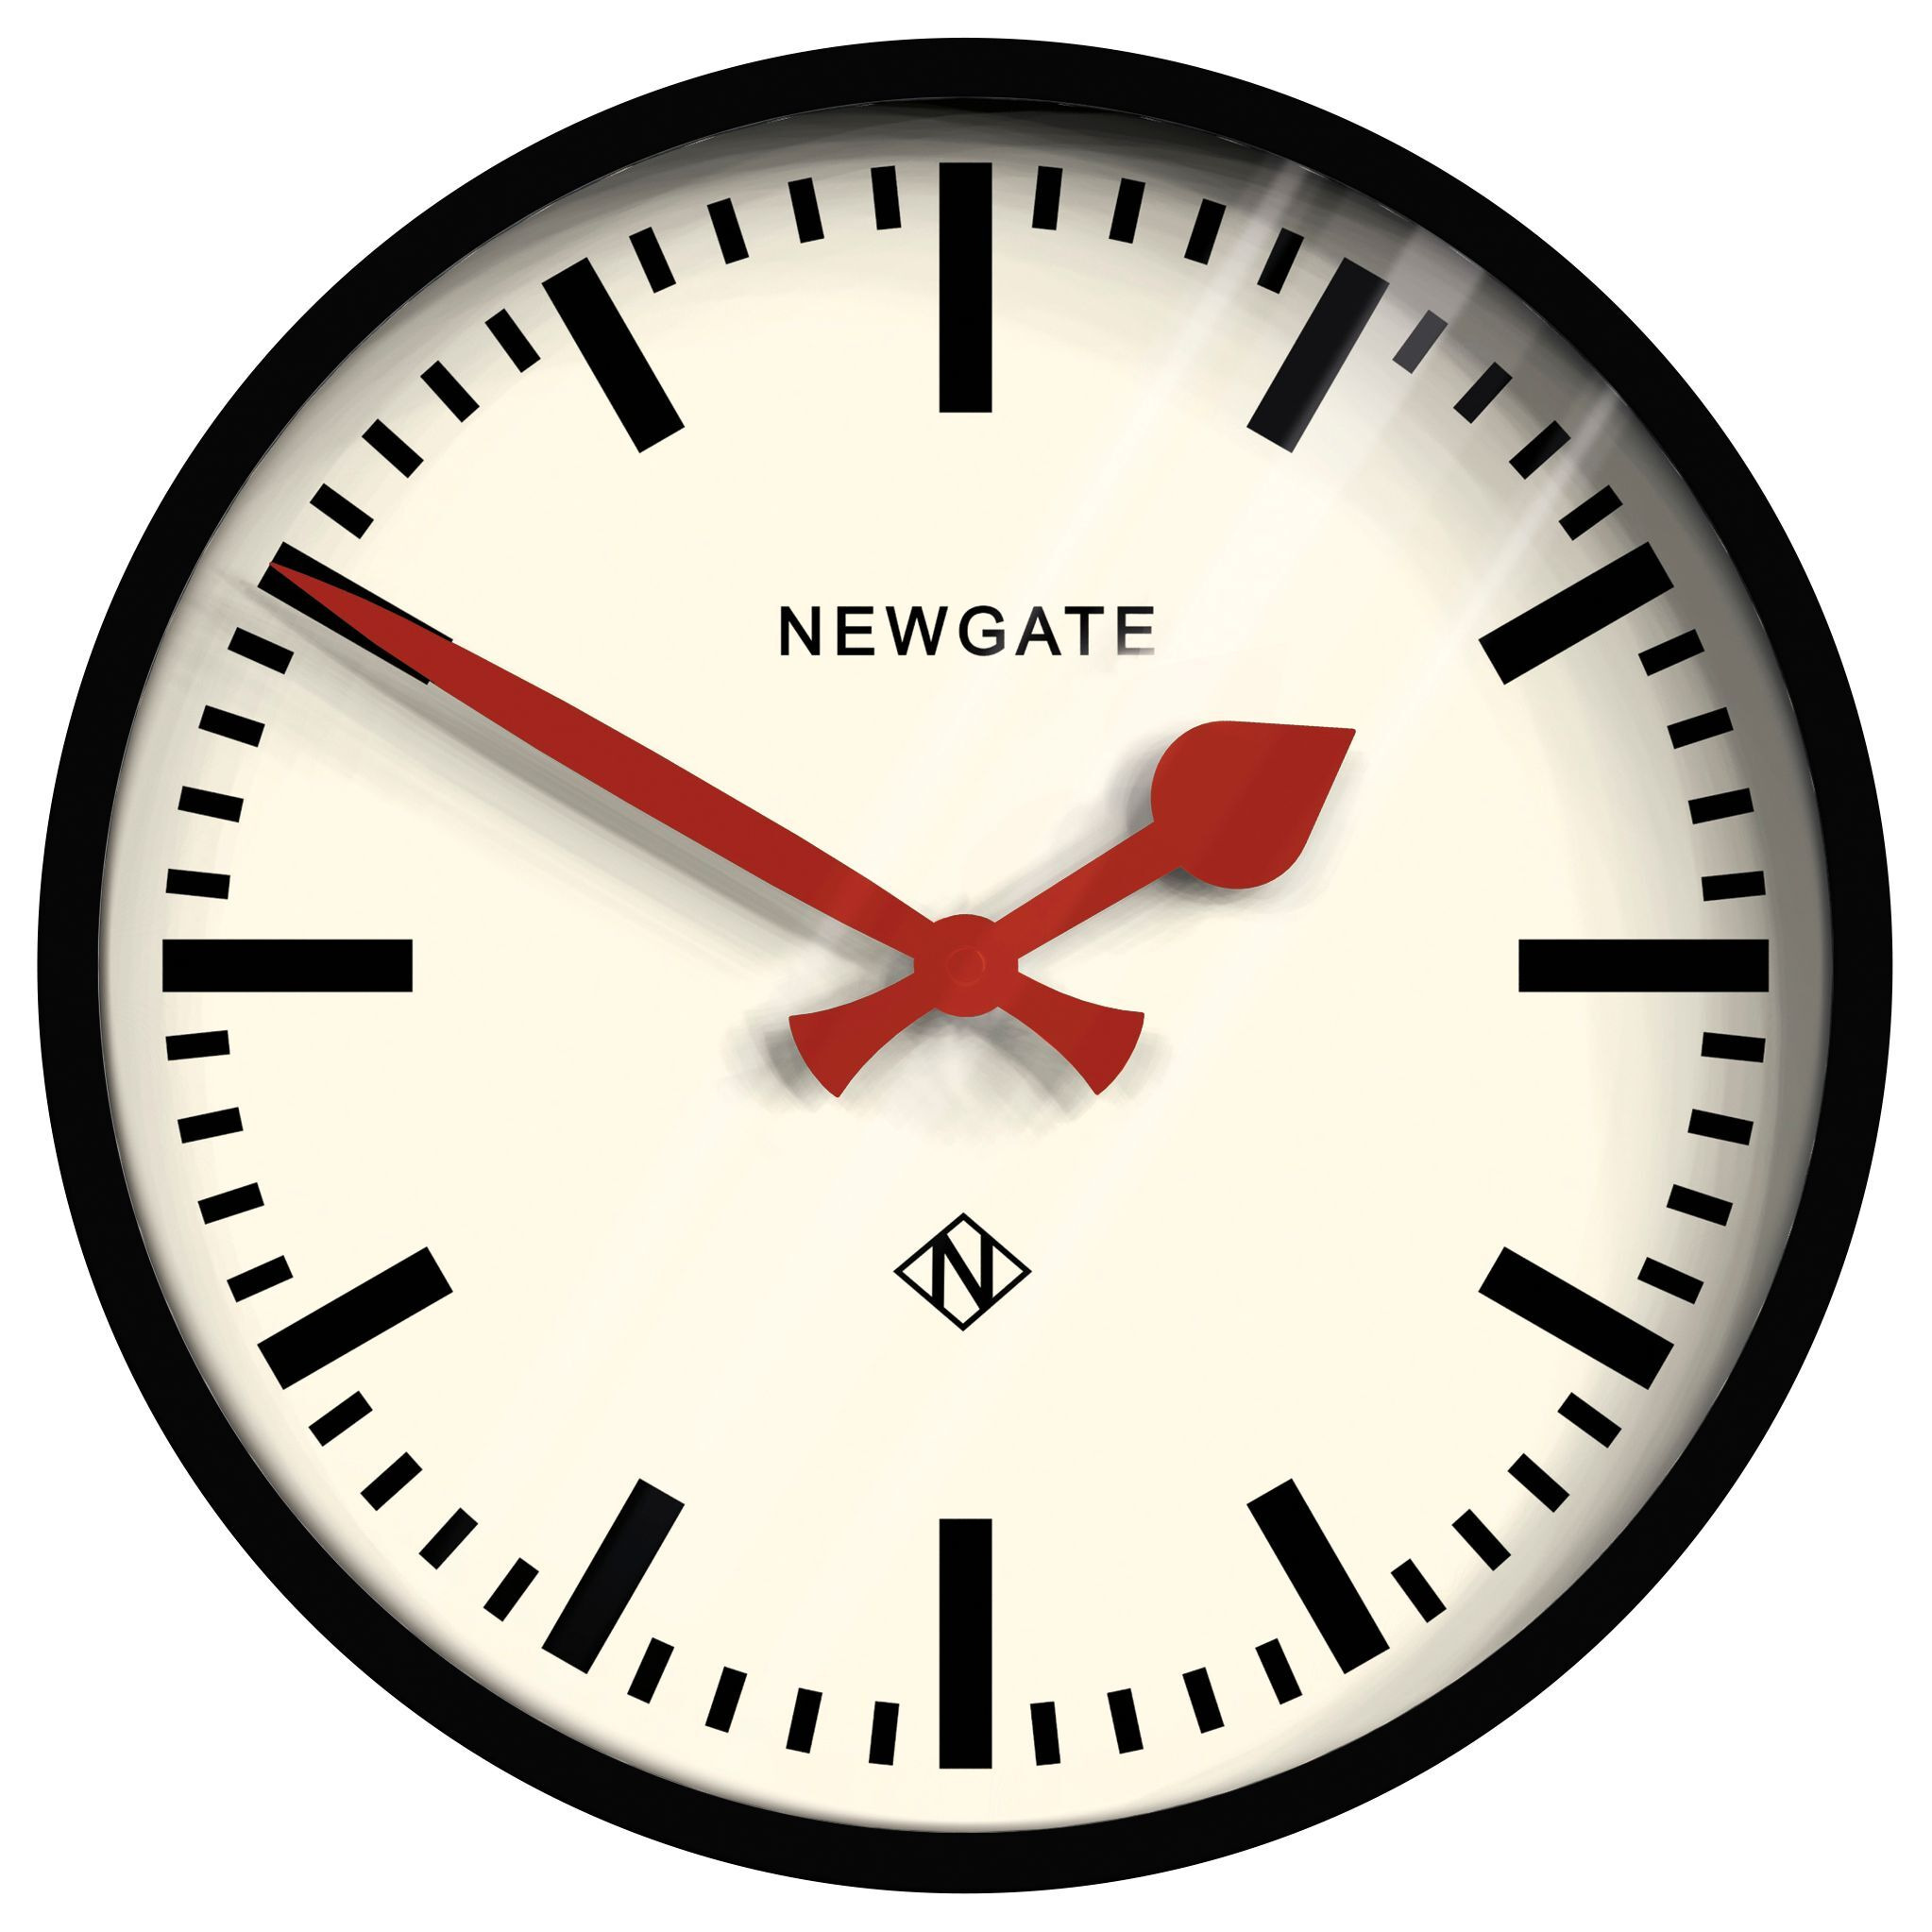 Newgate Clocks The Luggage Analogue Wall Clock, 30cm, Black/Red - image 1